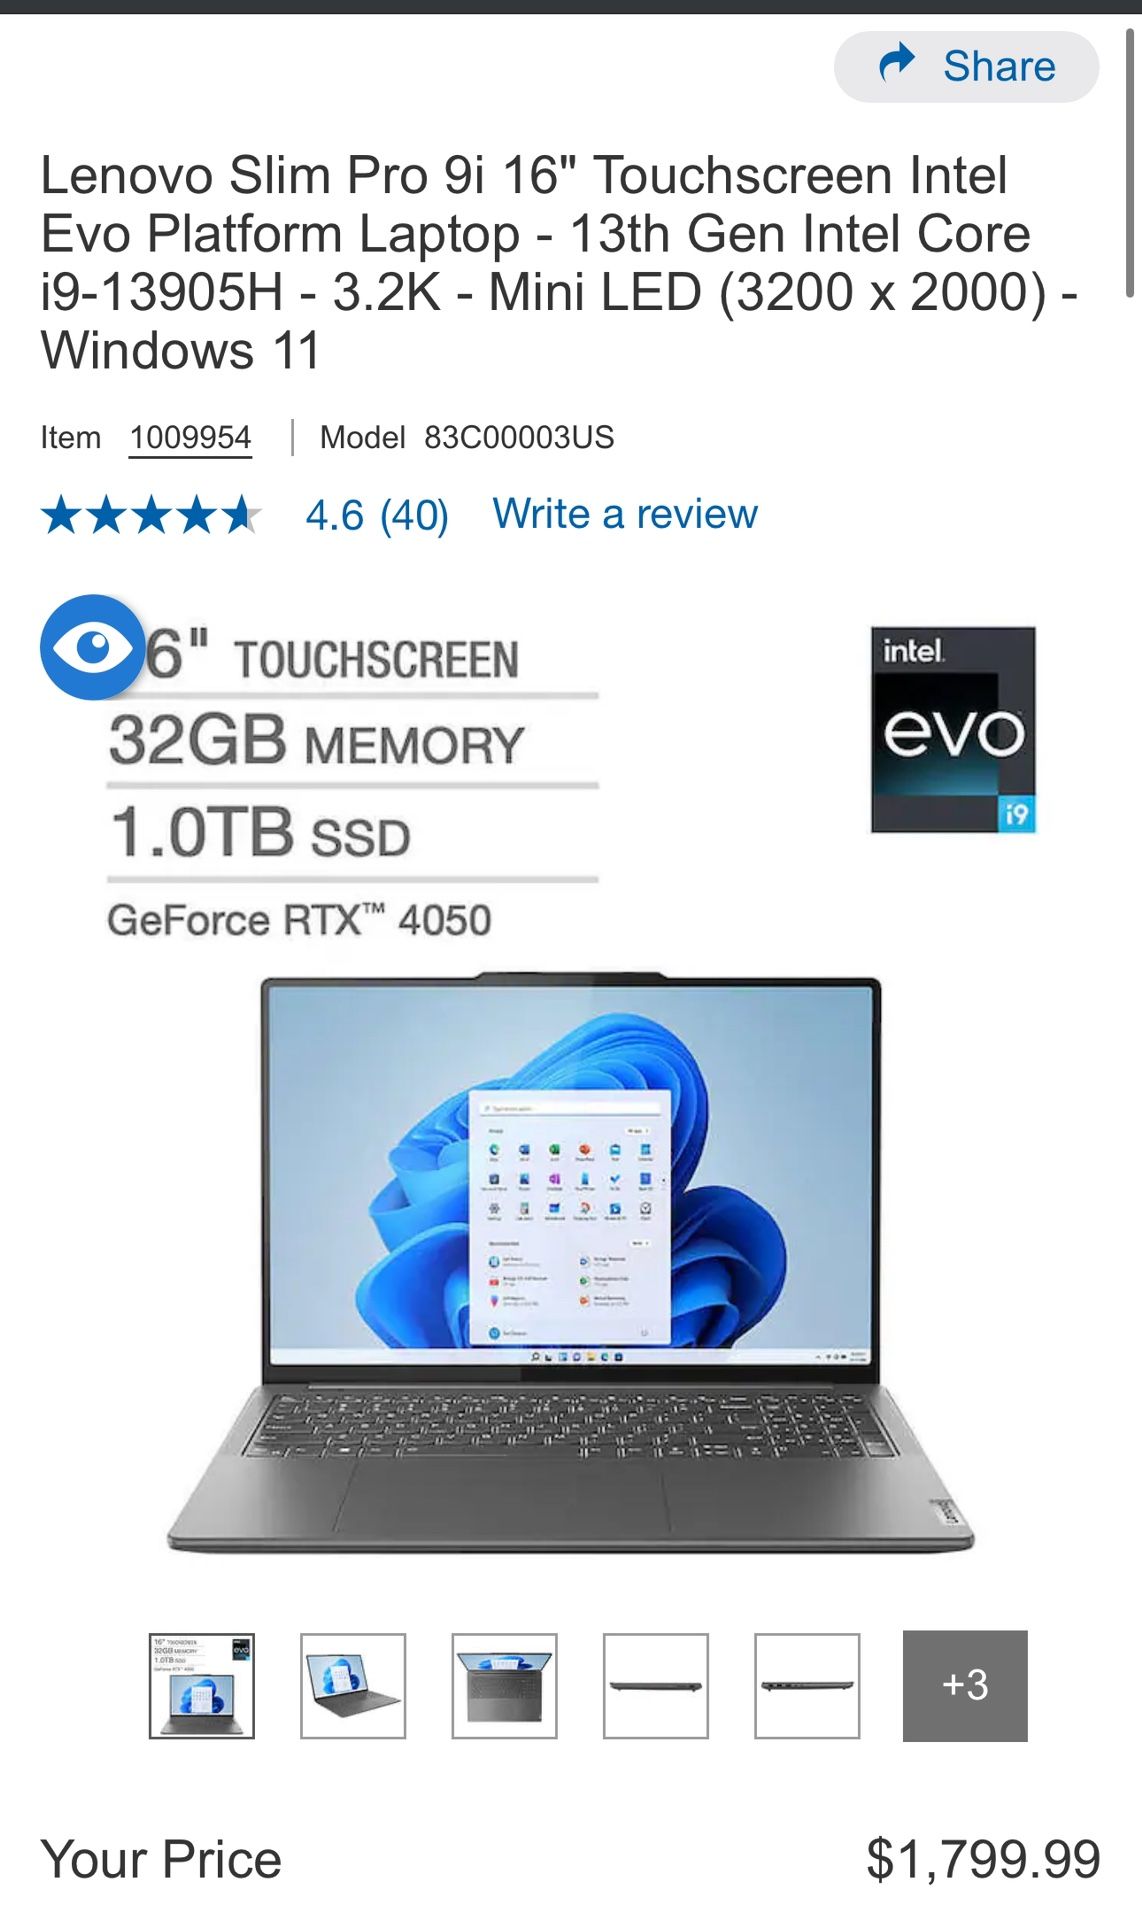 Lenovo Slim Pro 9i 16" Touchscreen Intel Evo Platform Laptop - 13th Gen Intel Core i9-13905H - 3.2K - Mini LED (3200 x 2000) - Windows 11